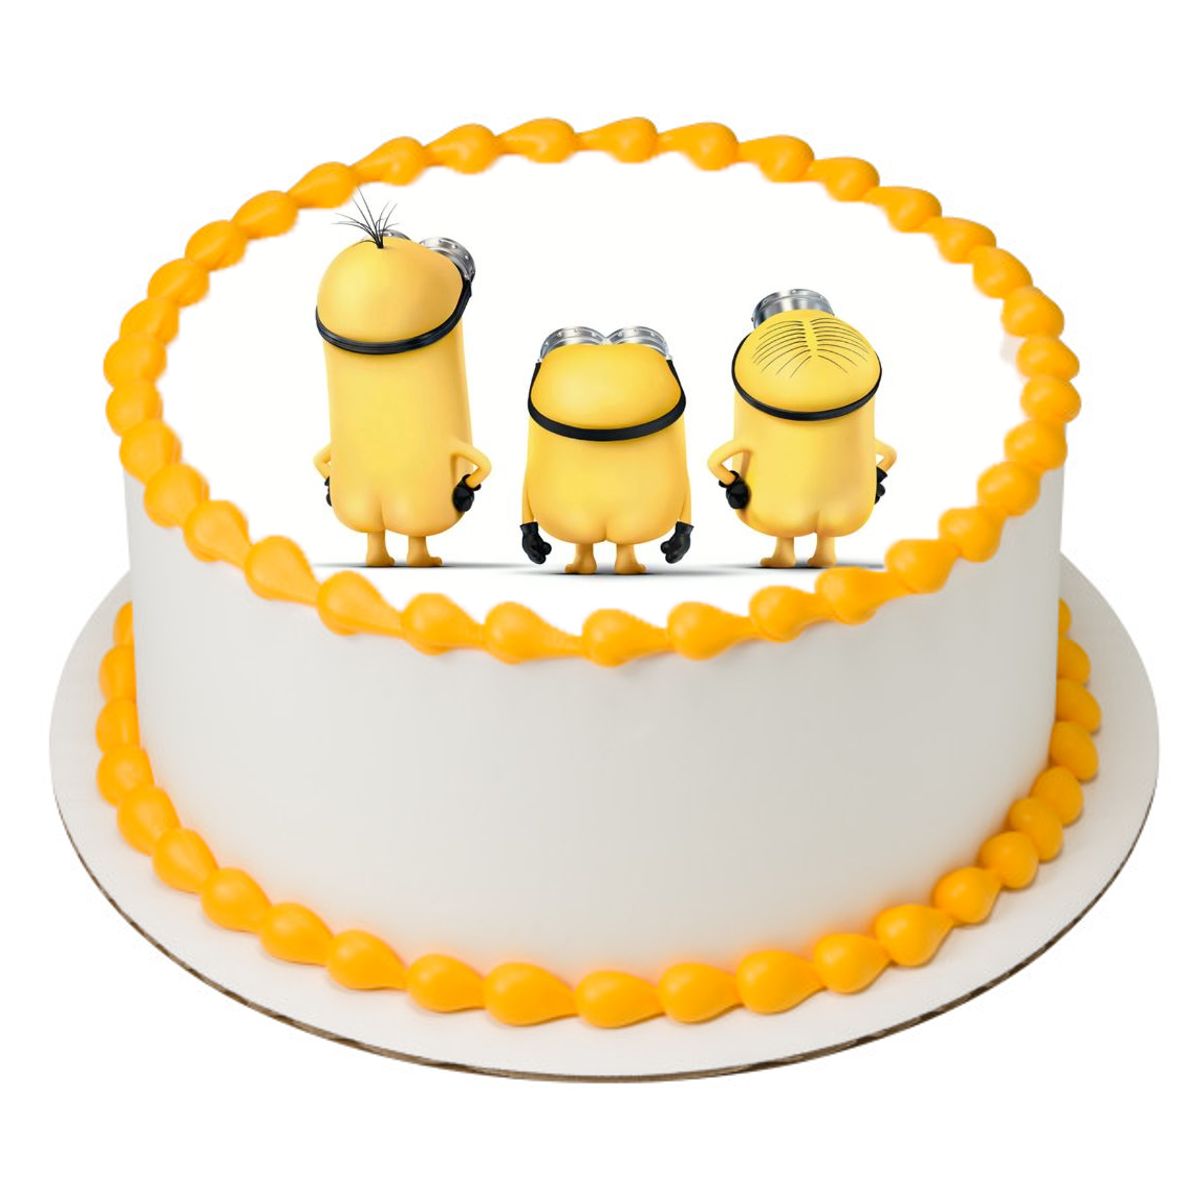 Despicable Me 2 Minion cake | Birthday cake pictures, Minion birthday cake,  Minion party